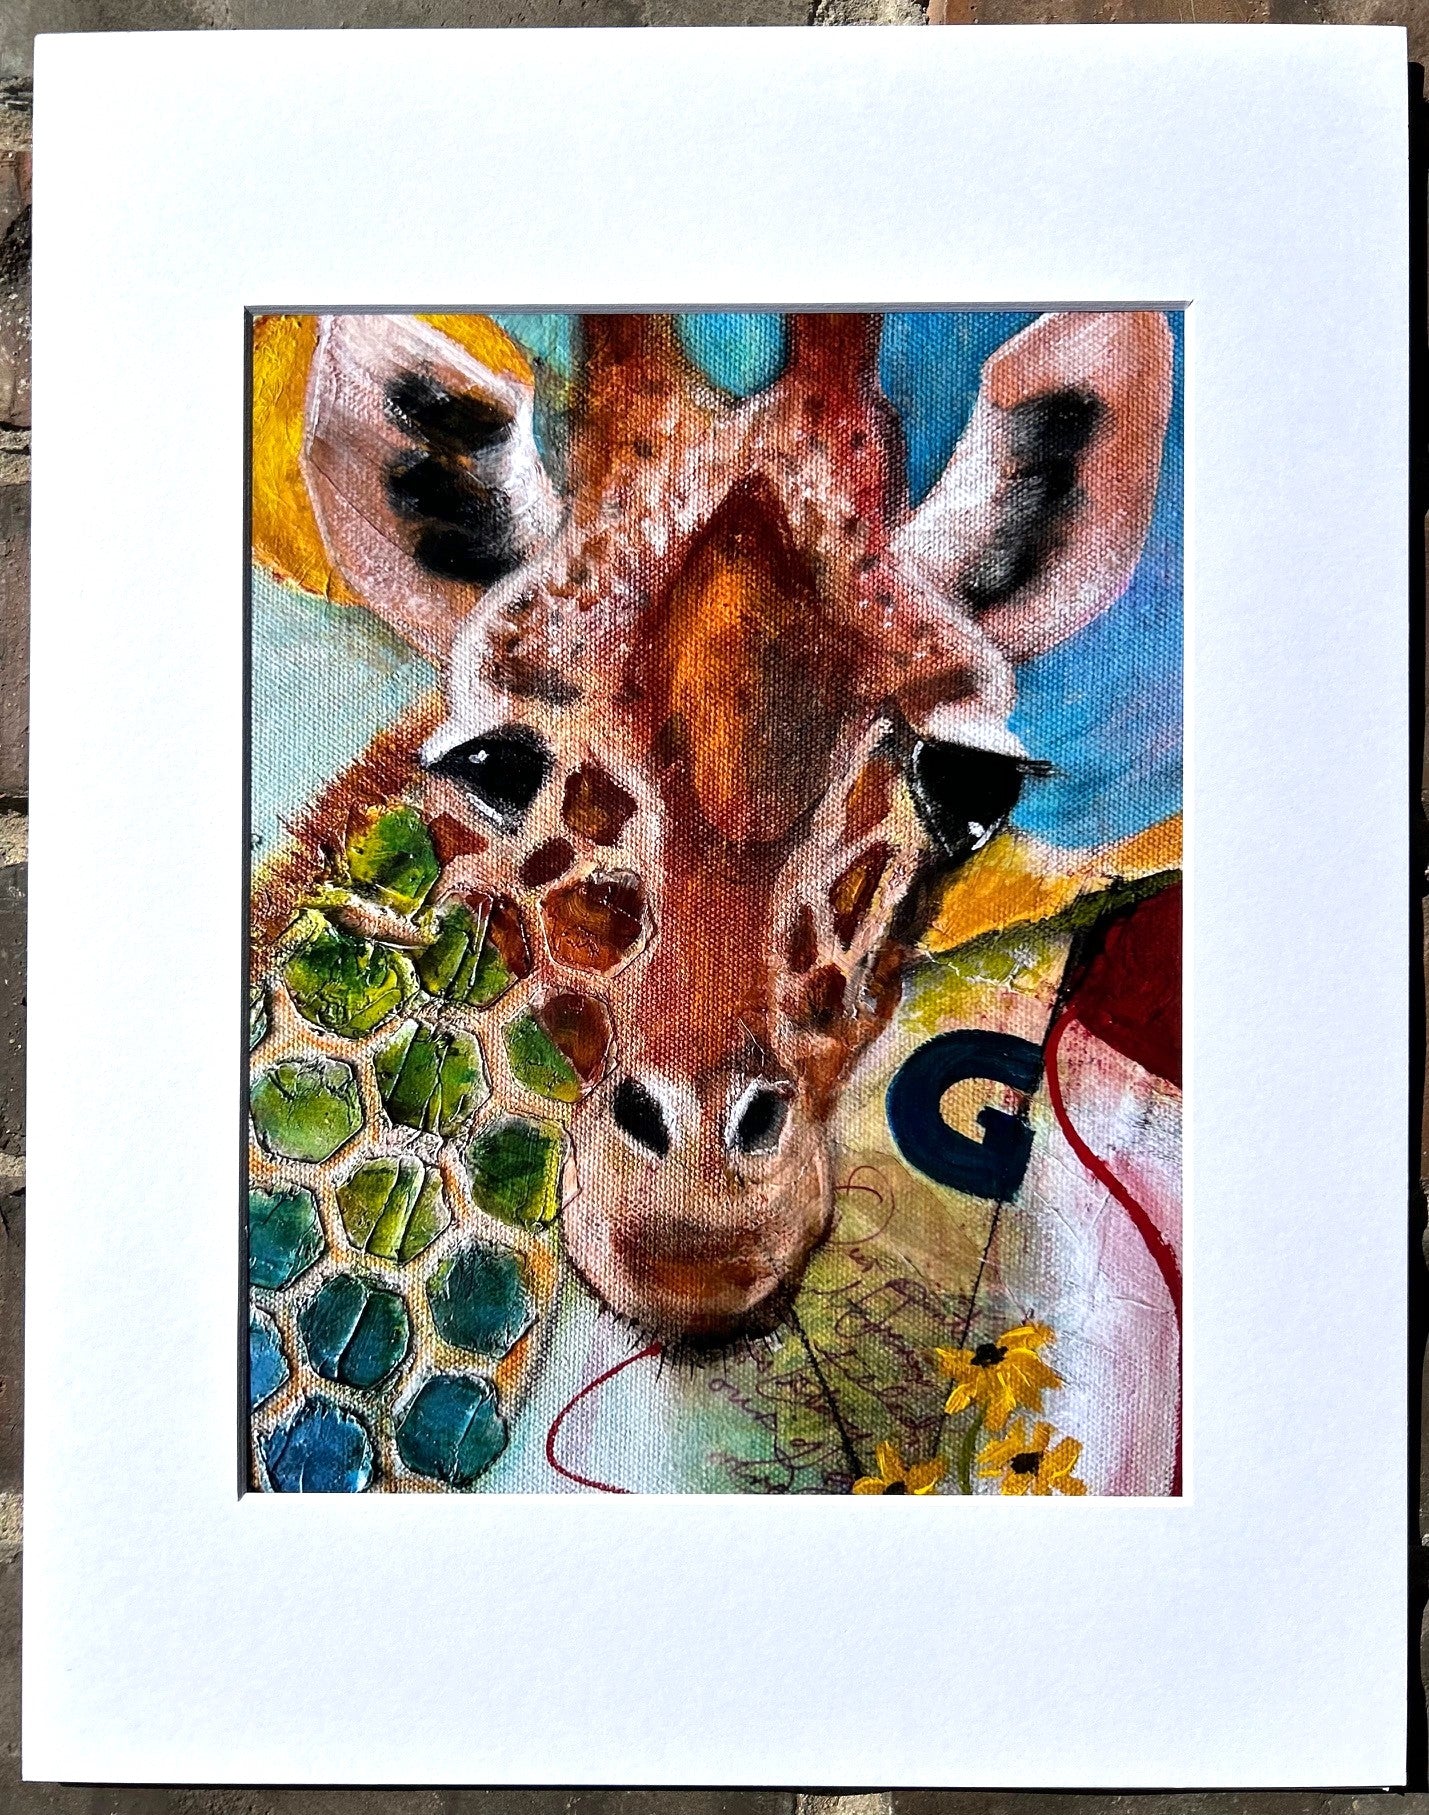 G is for Giraffe matted Giclee art print